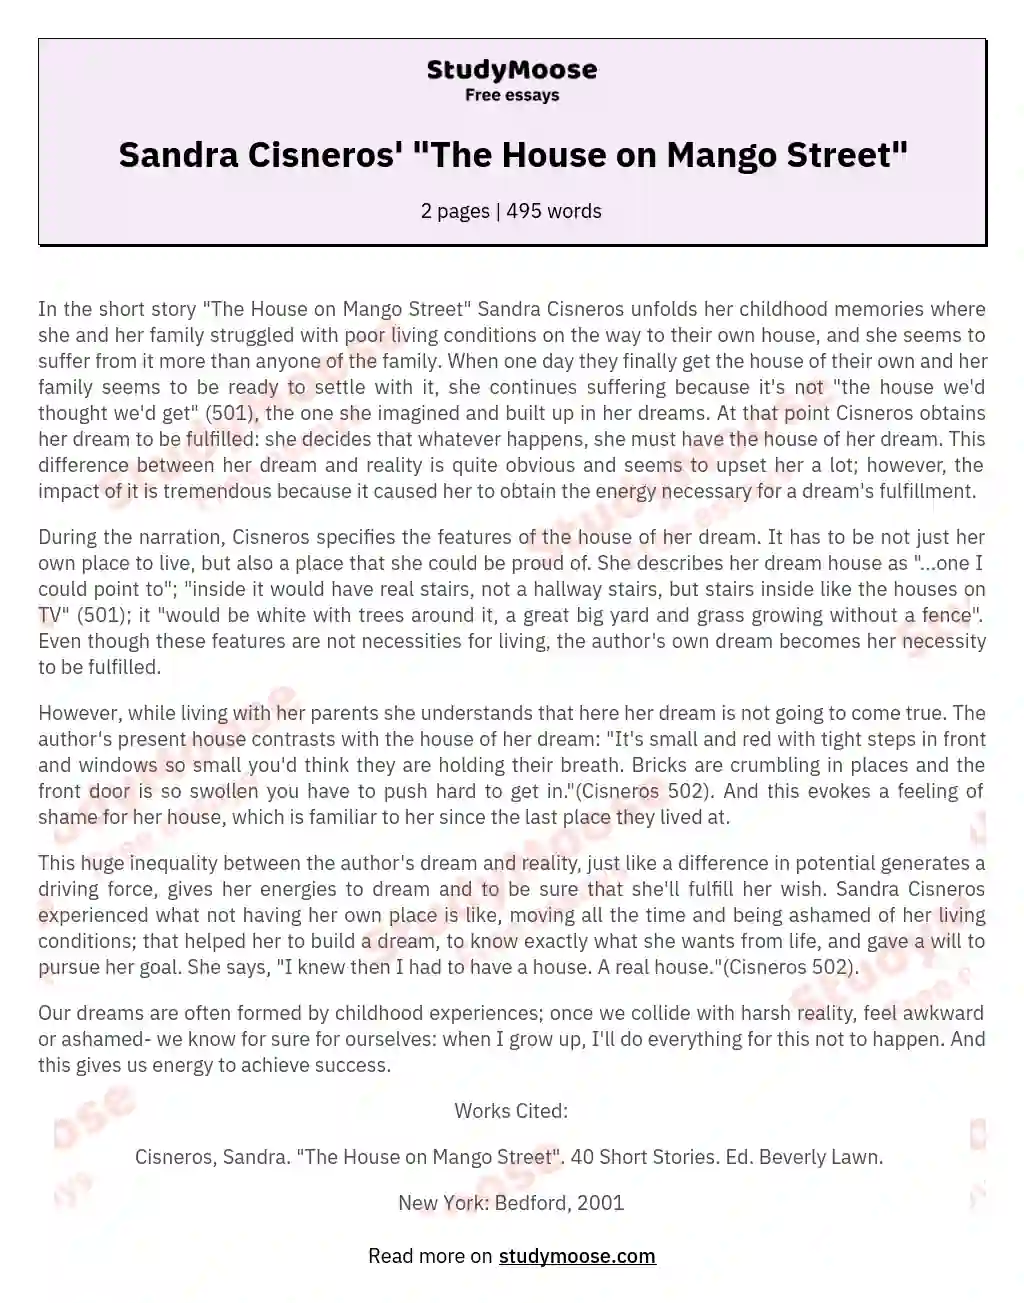 Sandra Cisneros' "The House on Mango Street" essay